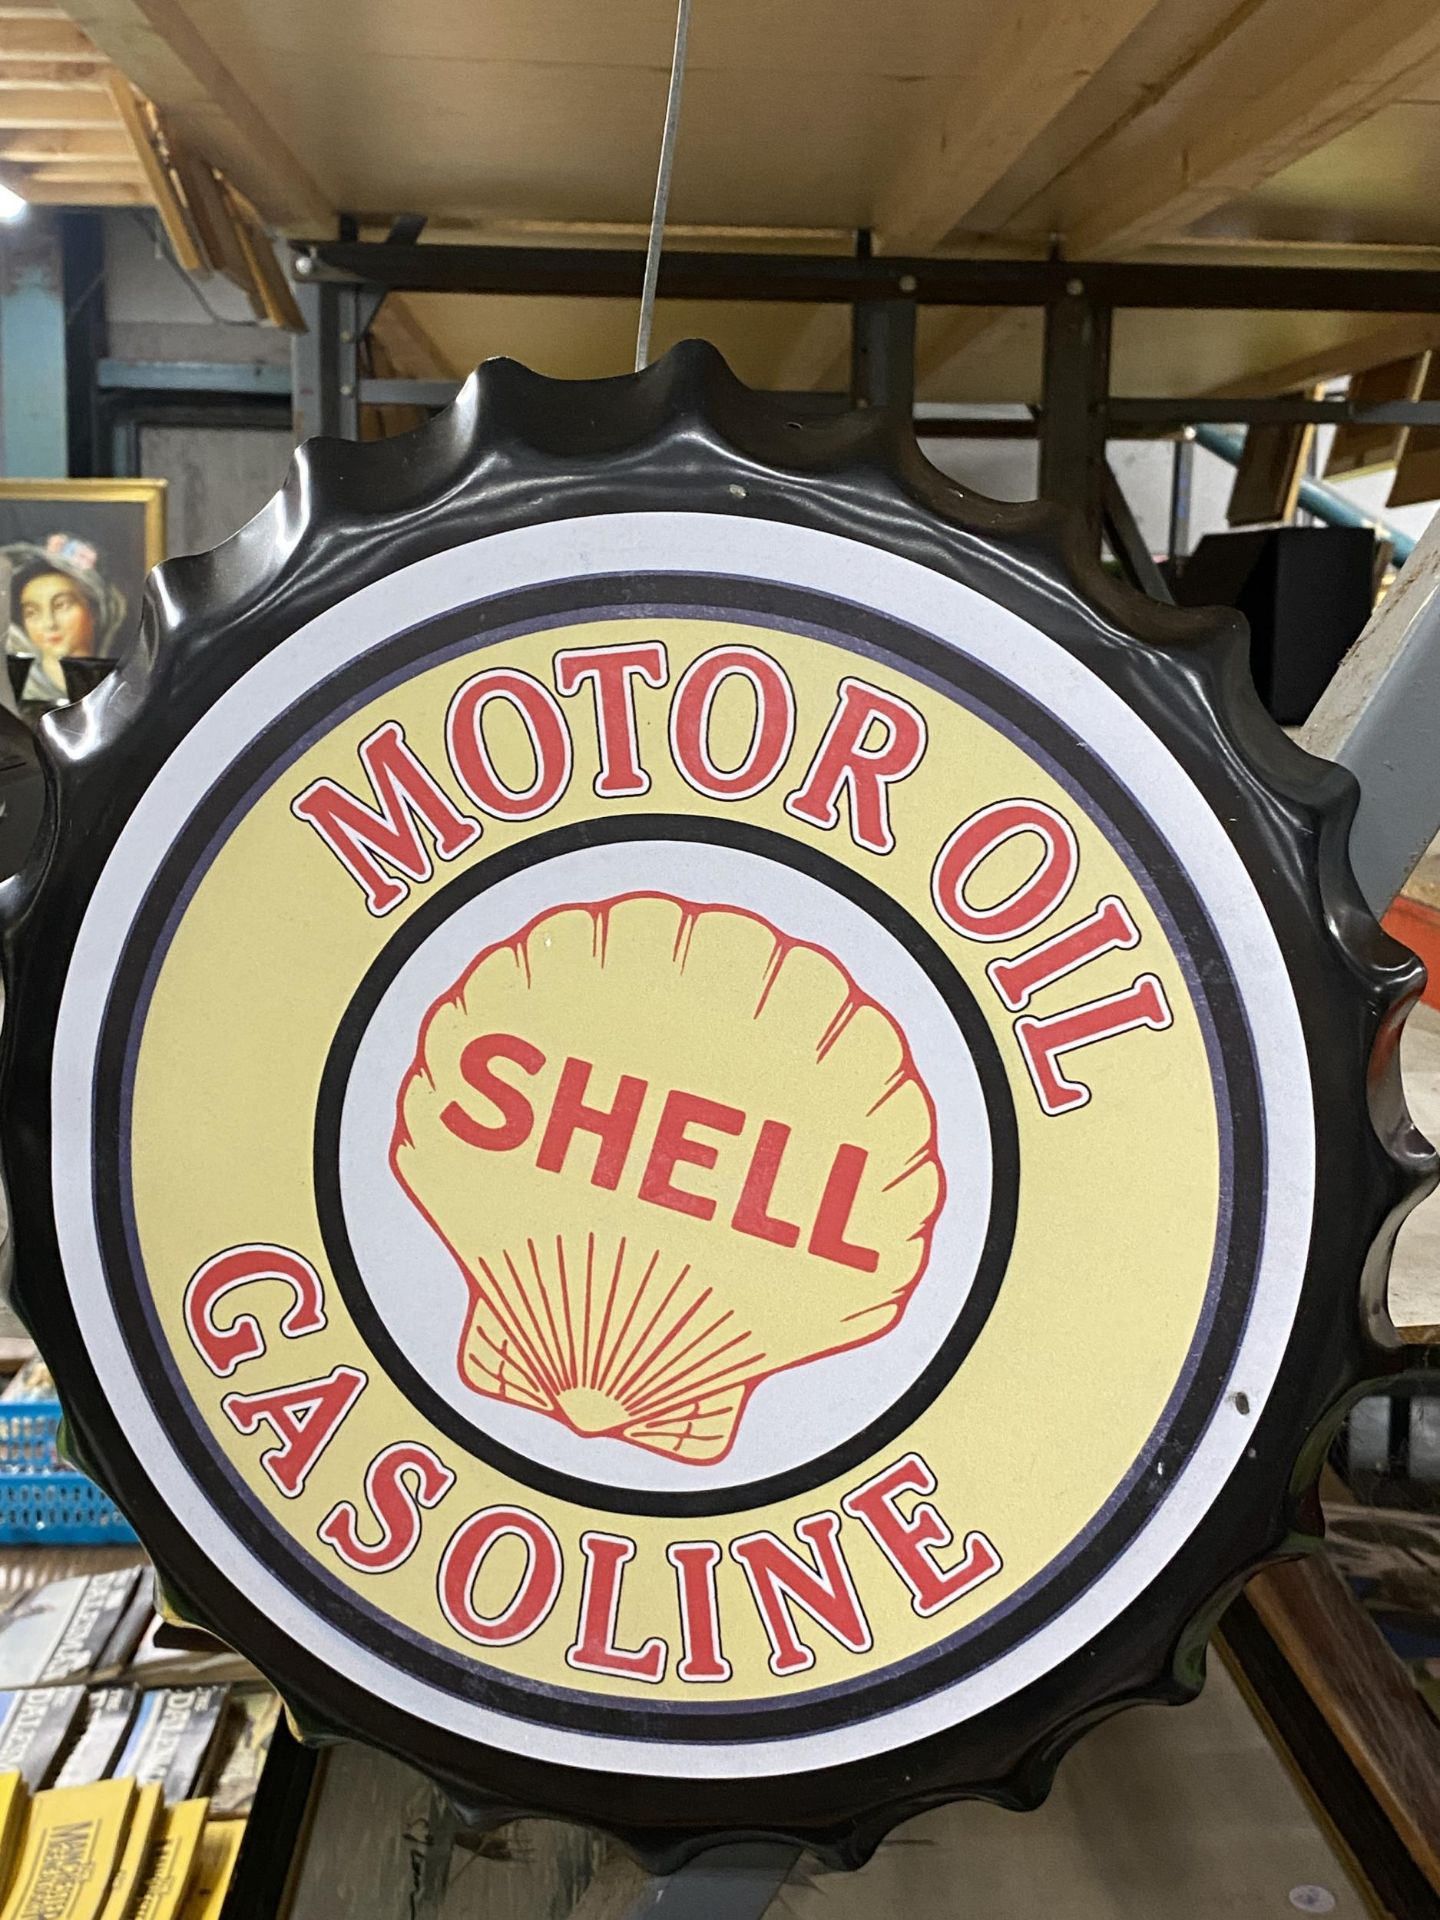 A MOTOR OIL SHELL GASOLINE METAL BOTTLE TOP SIGN